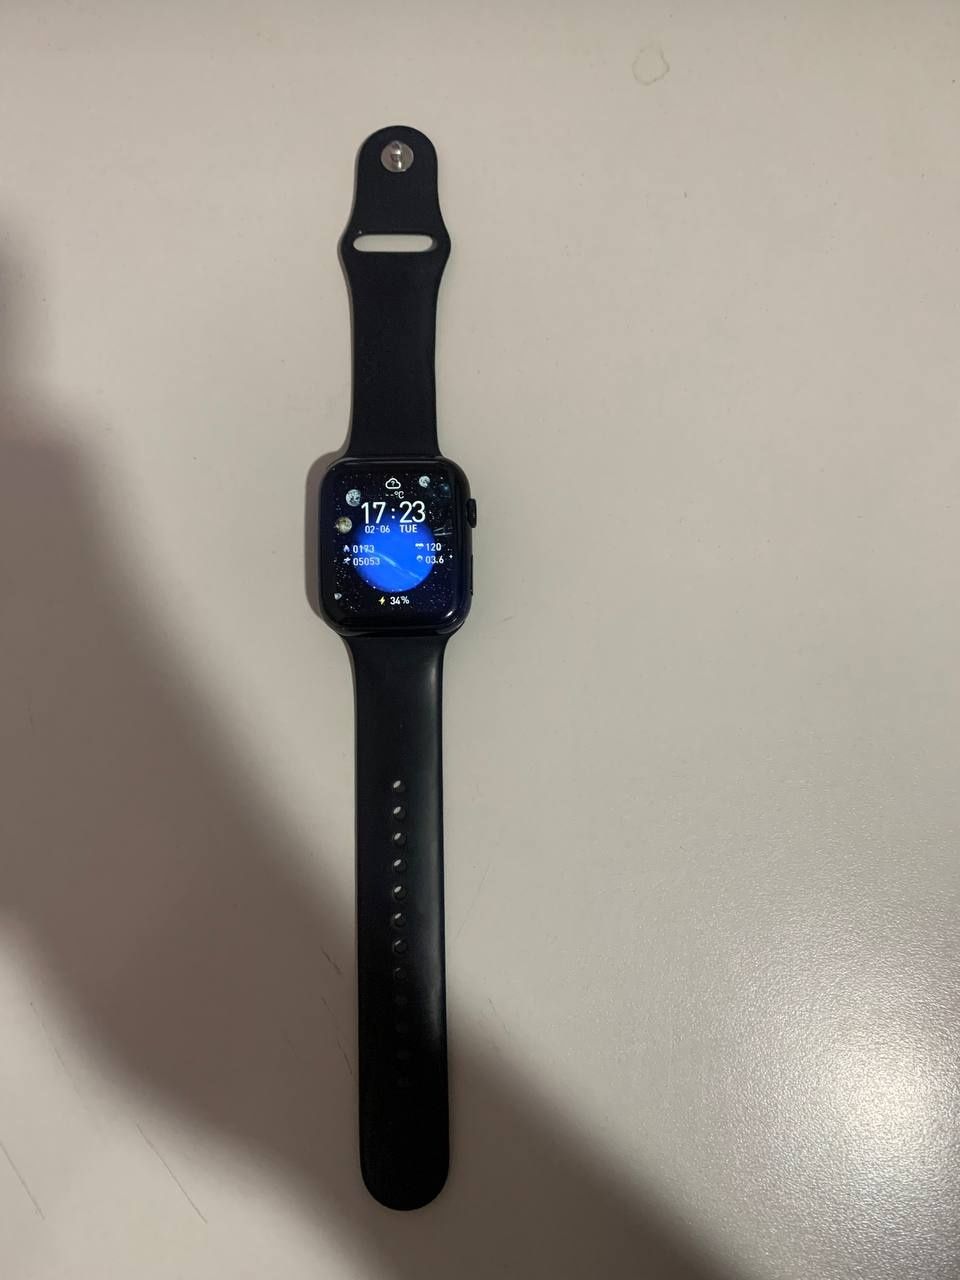 Smart watch HK7 Pro max